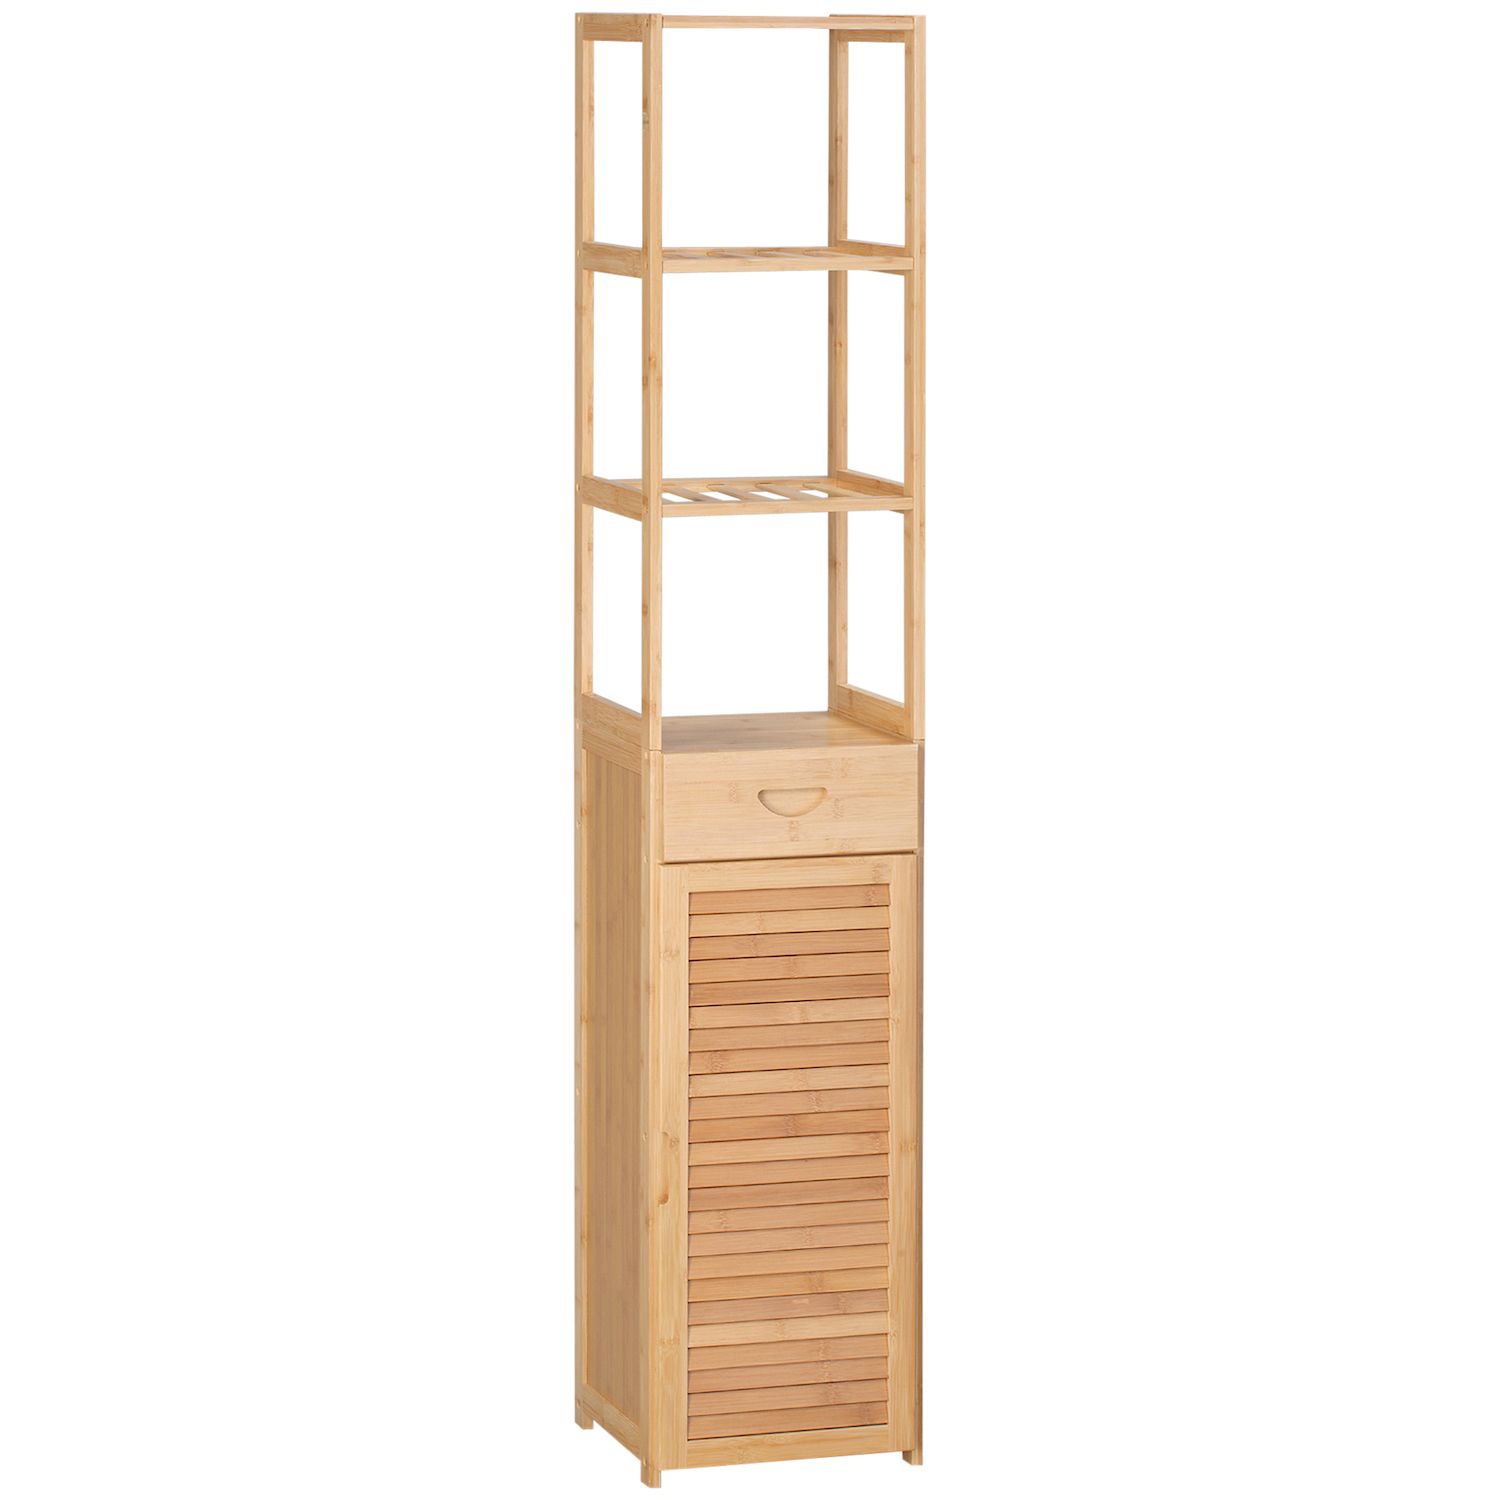 HOMCOM 67 Tall Bathroom Storage Cabinet, Freestanding Linen Tower